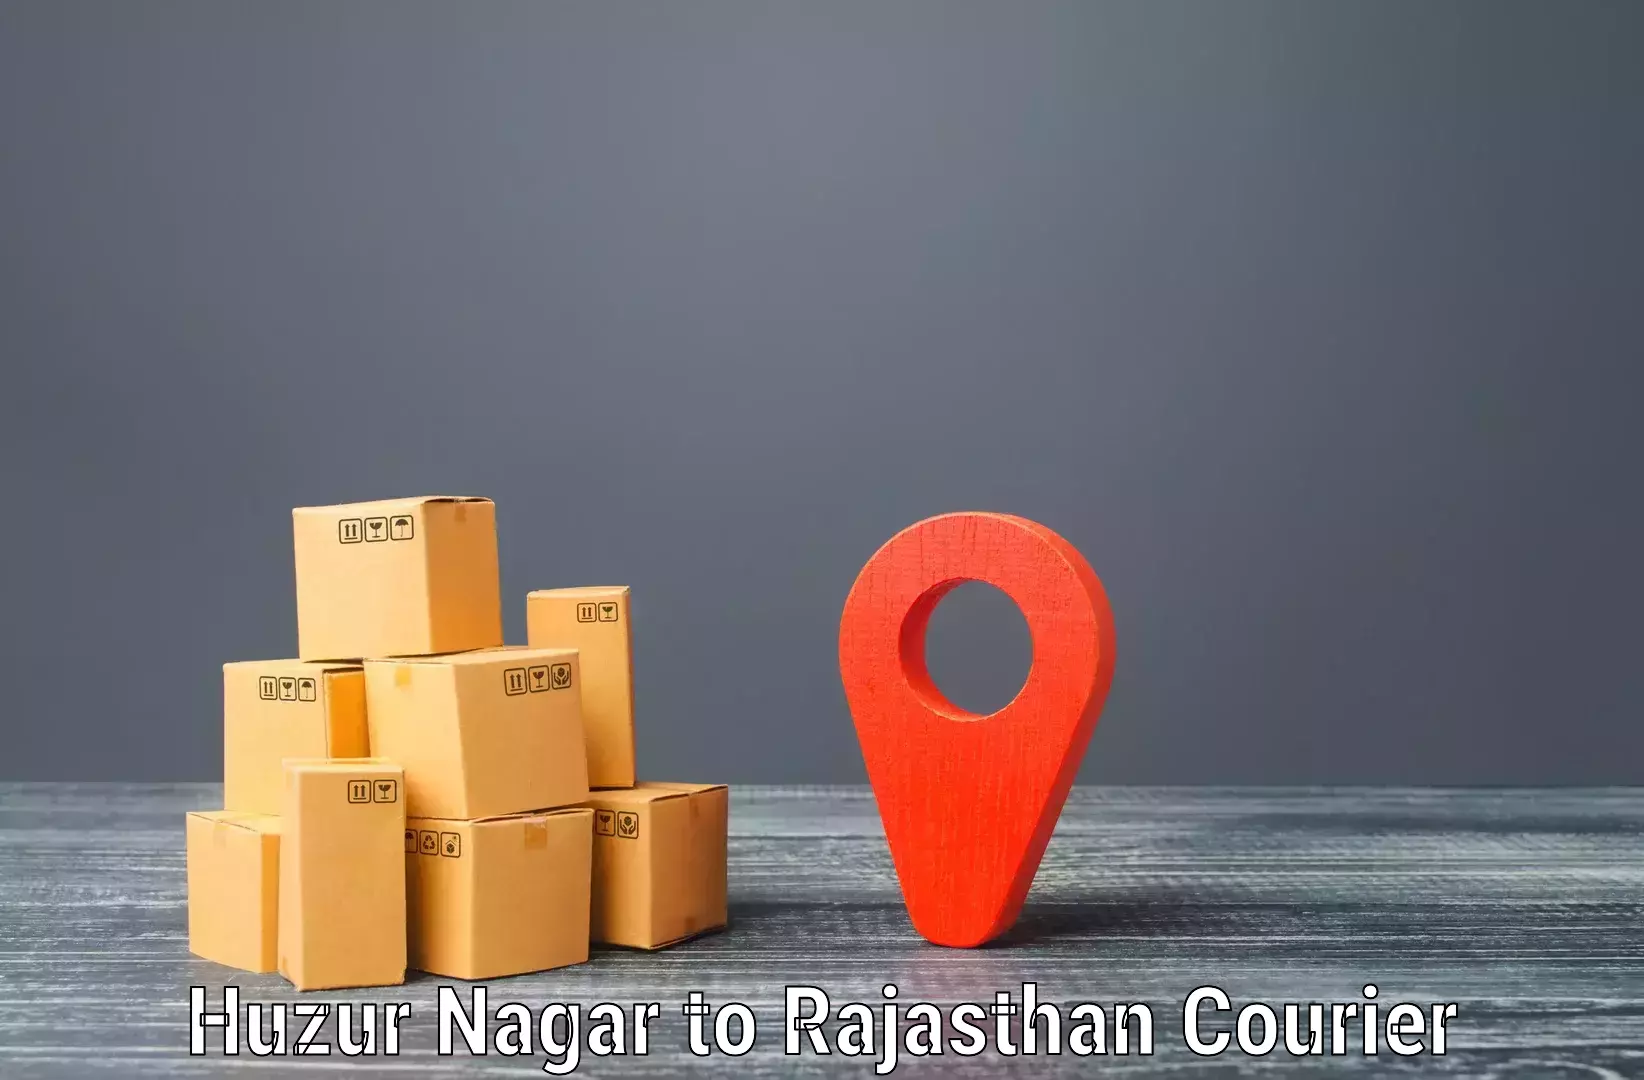 User-friendly delivery service Huzur Nagar to Rupbas